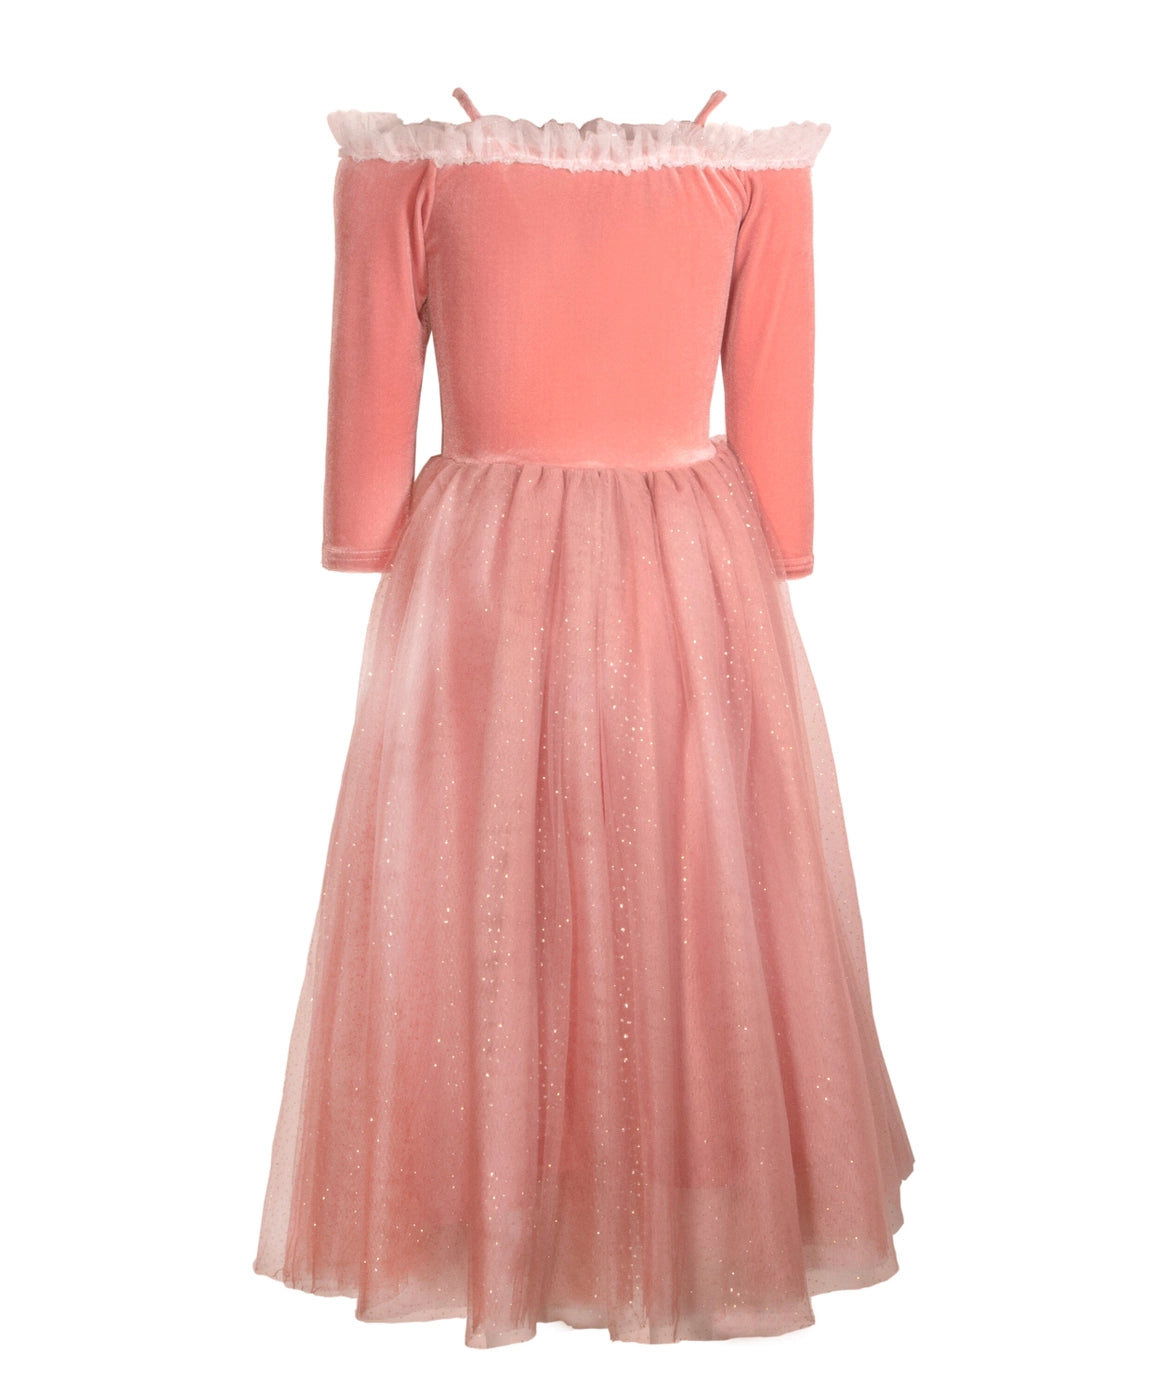 Briar Rose Princess Costume Dress